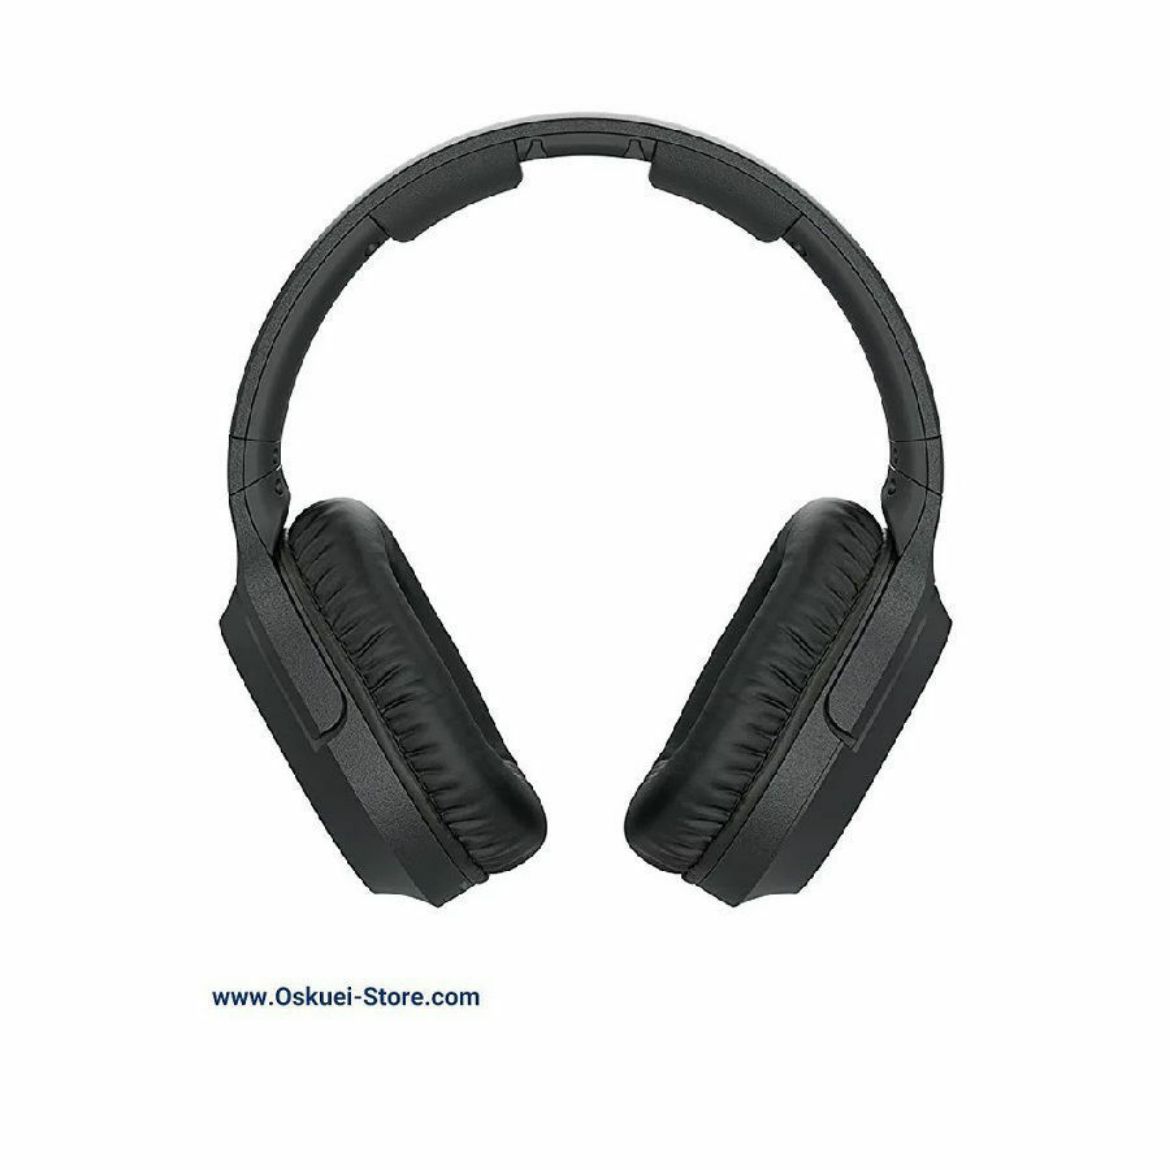 Sony MDR-RF995RK Wireless Headphones Black